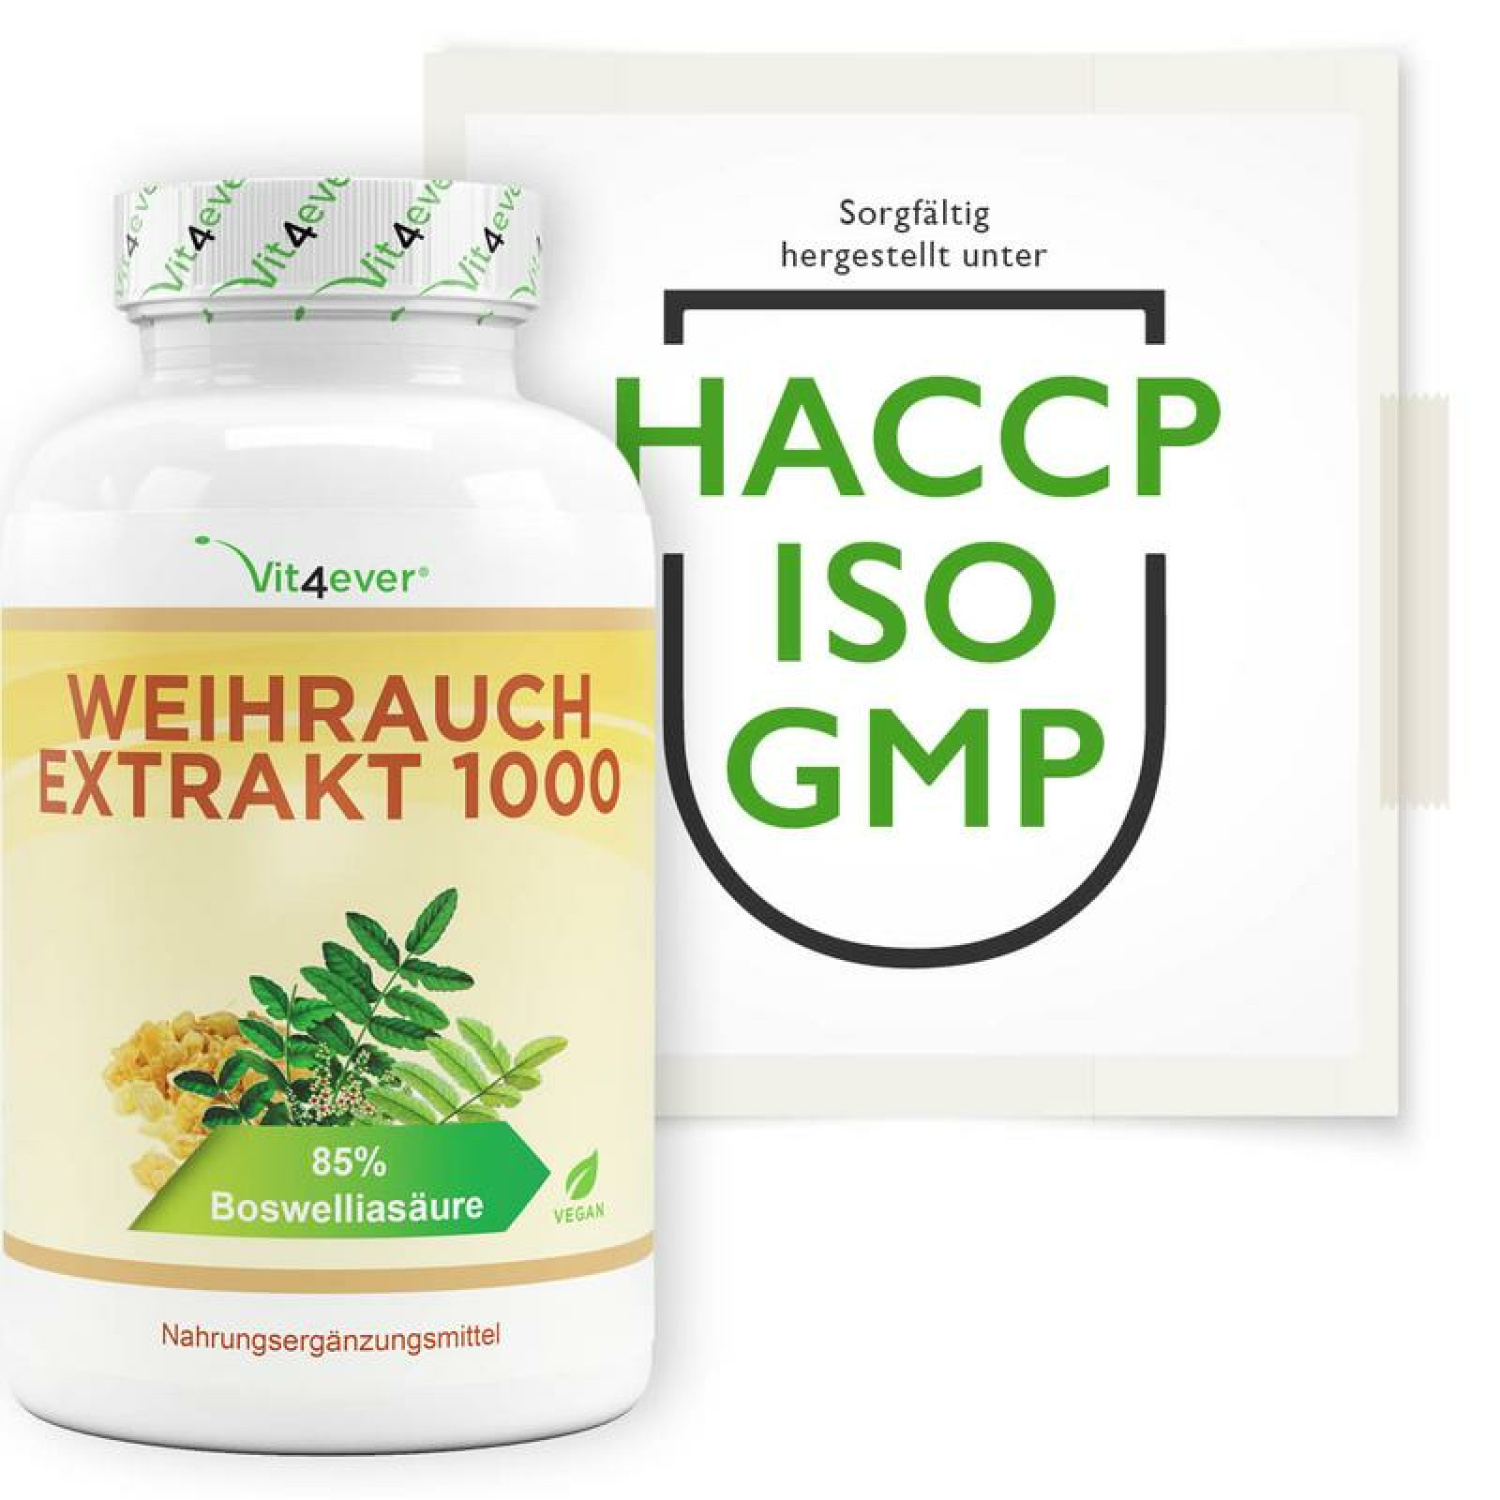 https://youandnature.de/produkt/weihrauch-extrakt-1000-1000-mg-pro-tag-85-boswellia-saeure-130-kapseln/